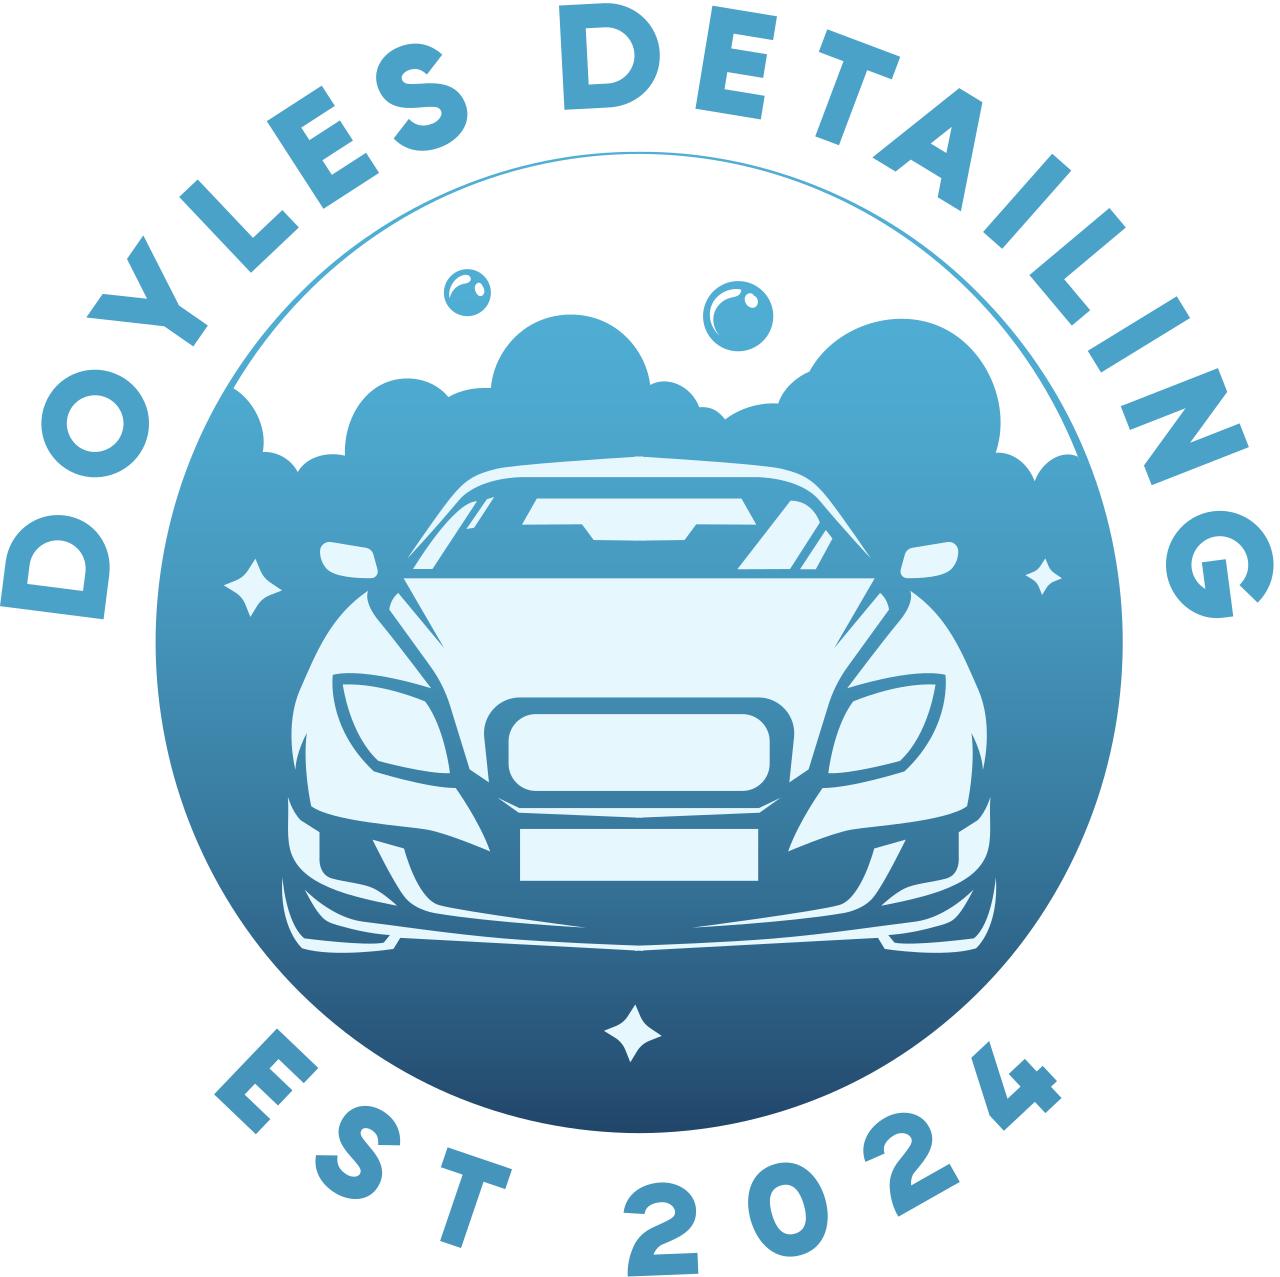 DOYLES DETAILING's logo